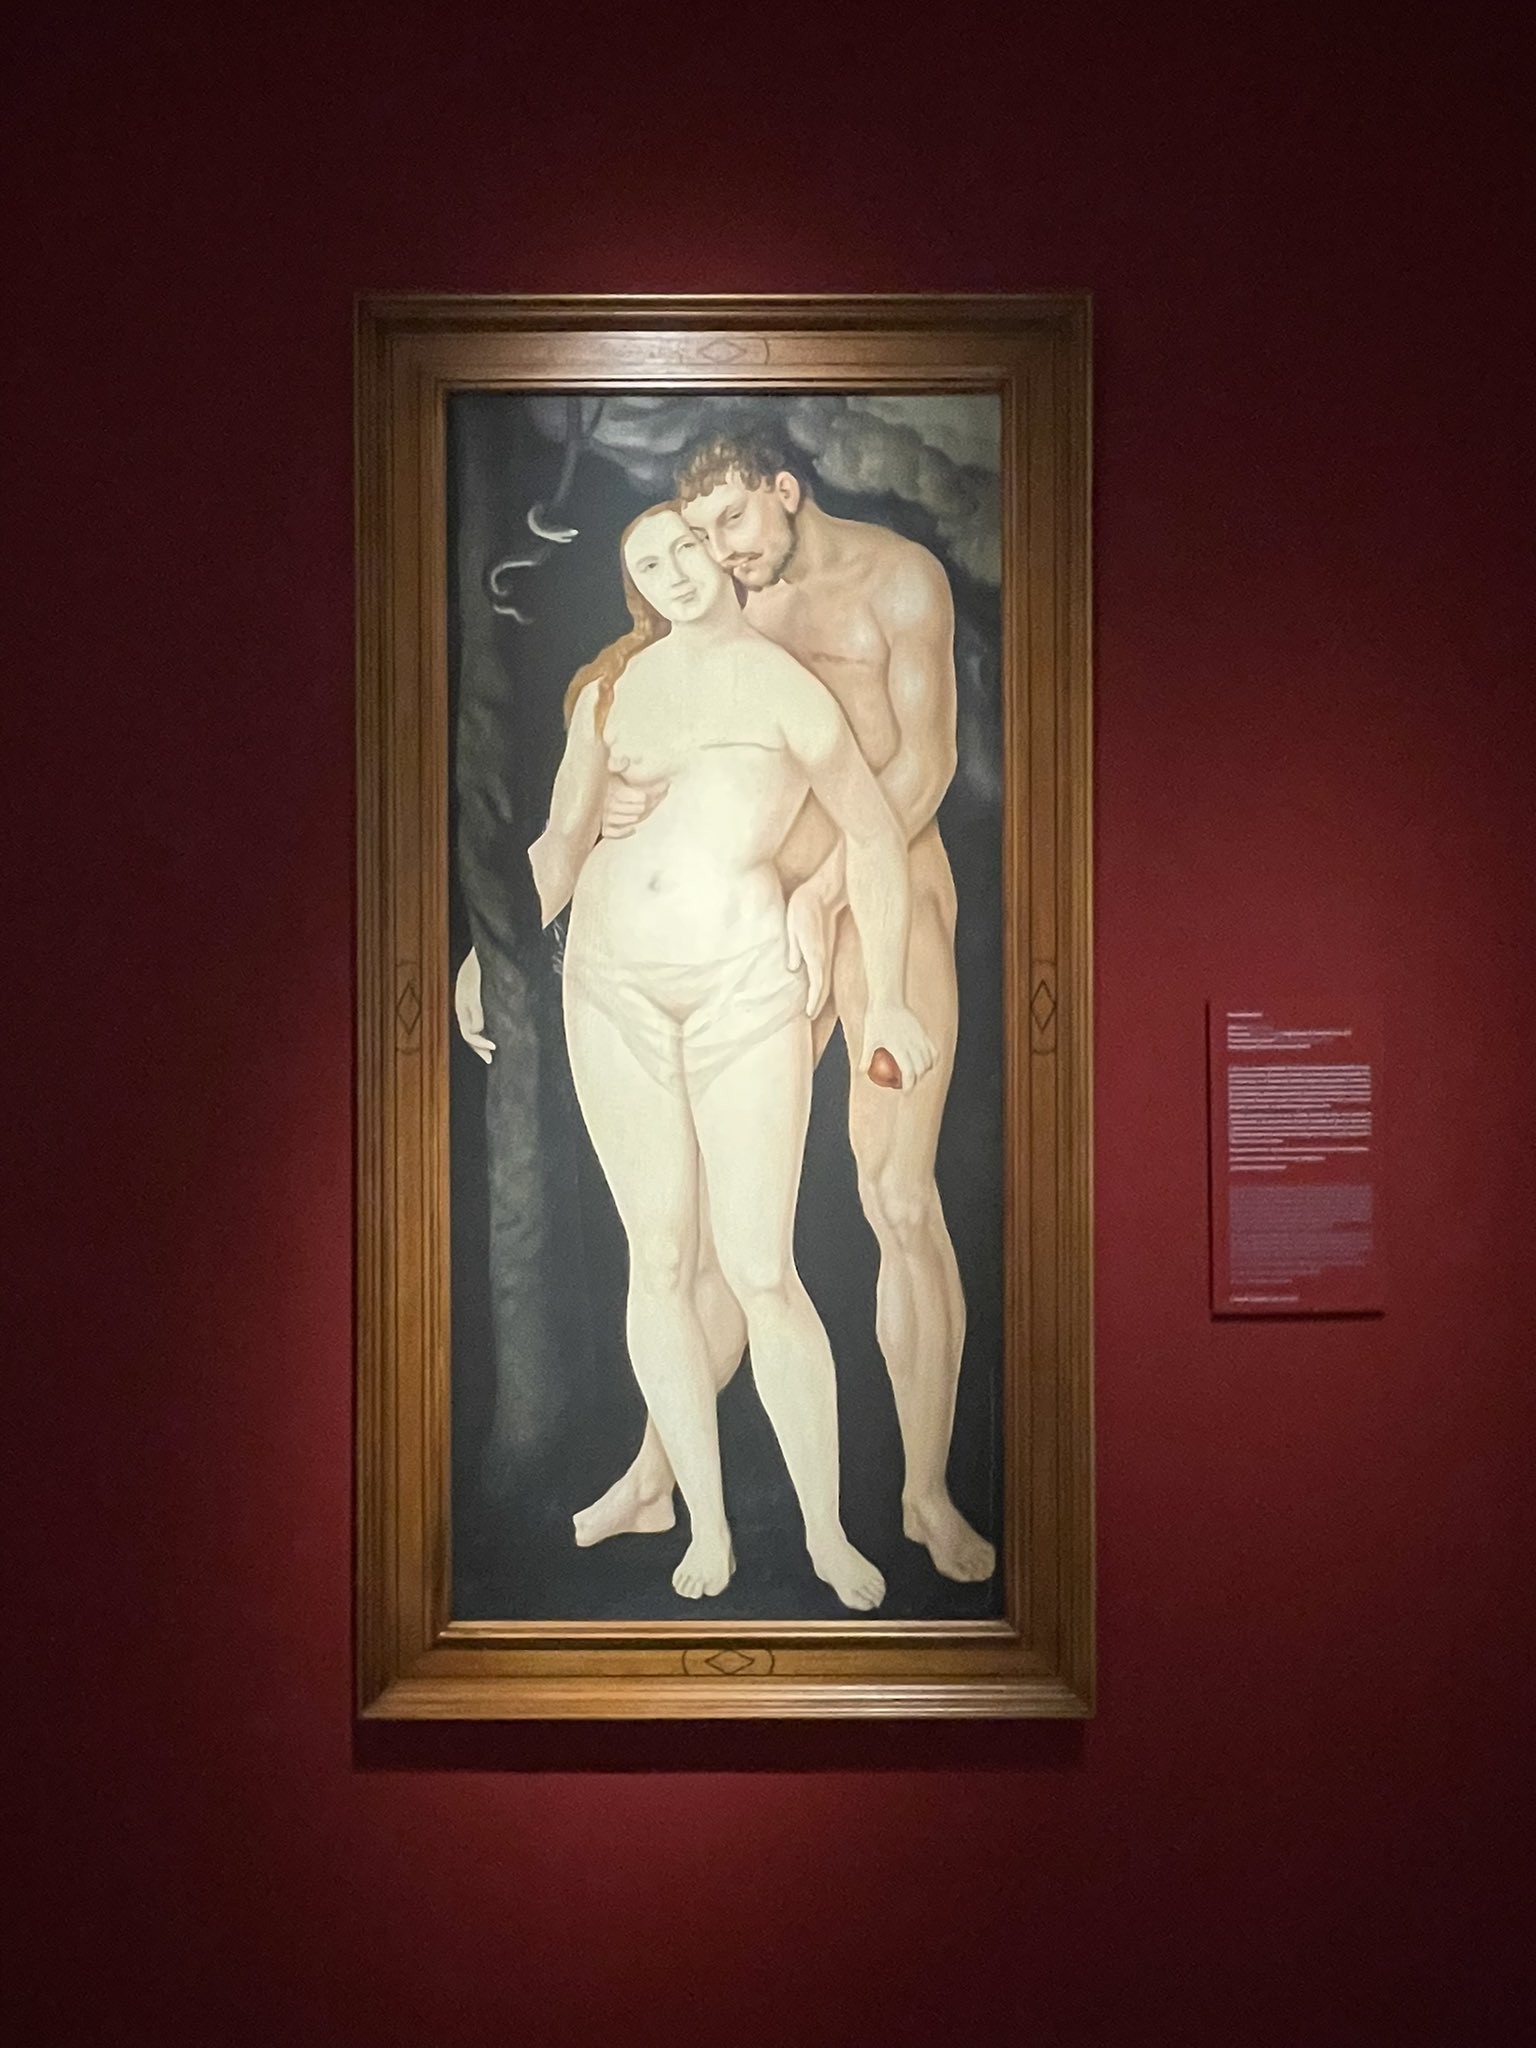 Obra 'Adão e Eva', de Hans Baldung Grien, modificada digitalmente — Foto: Jorge Salgado/Museu Nacional Thyssen-Bornemisza